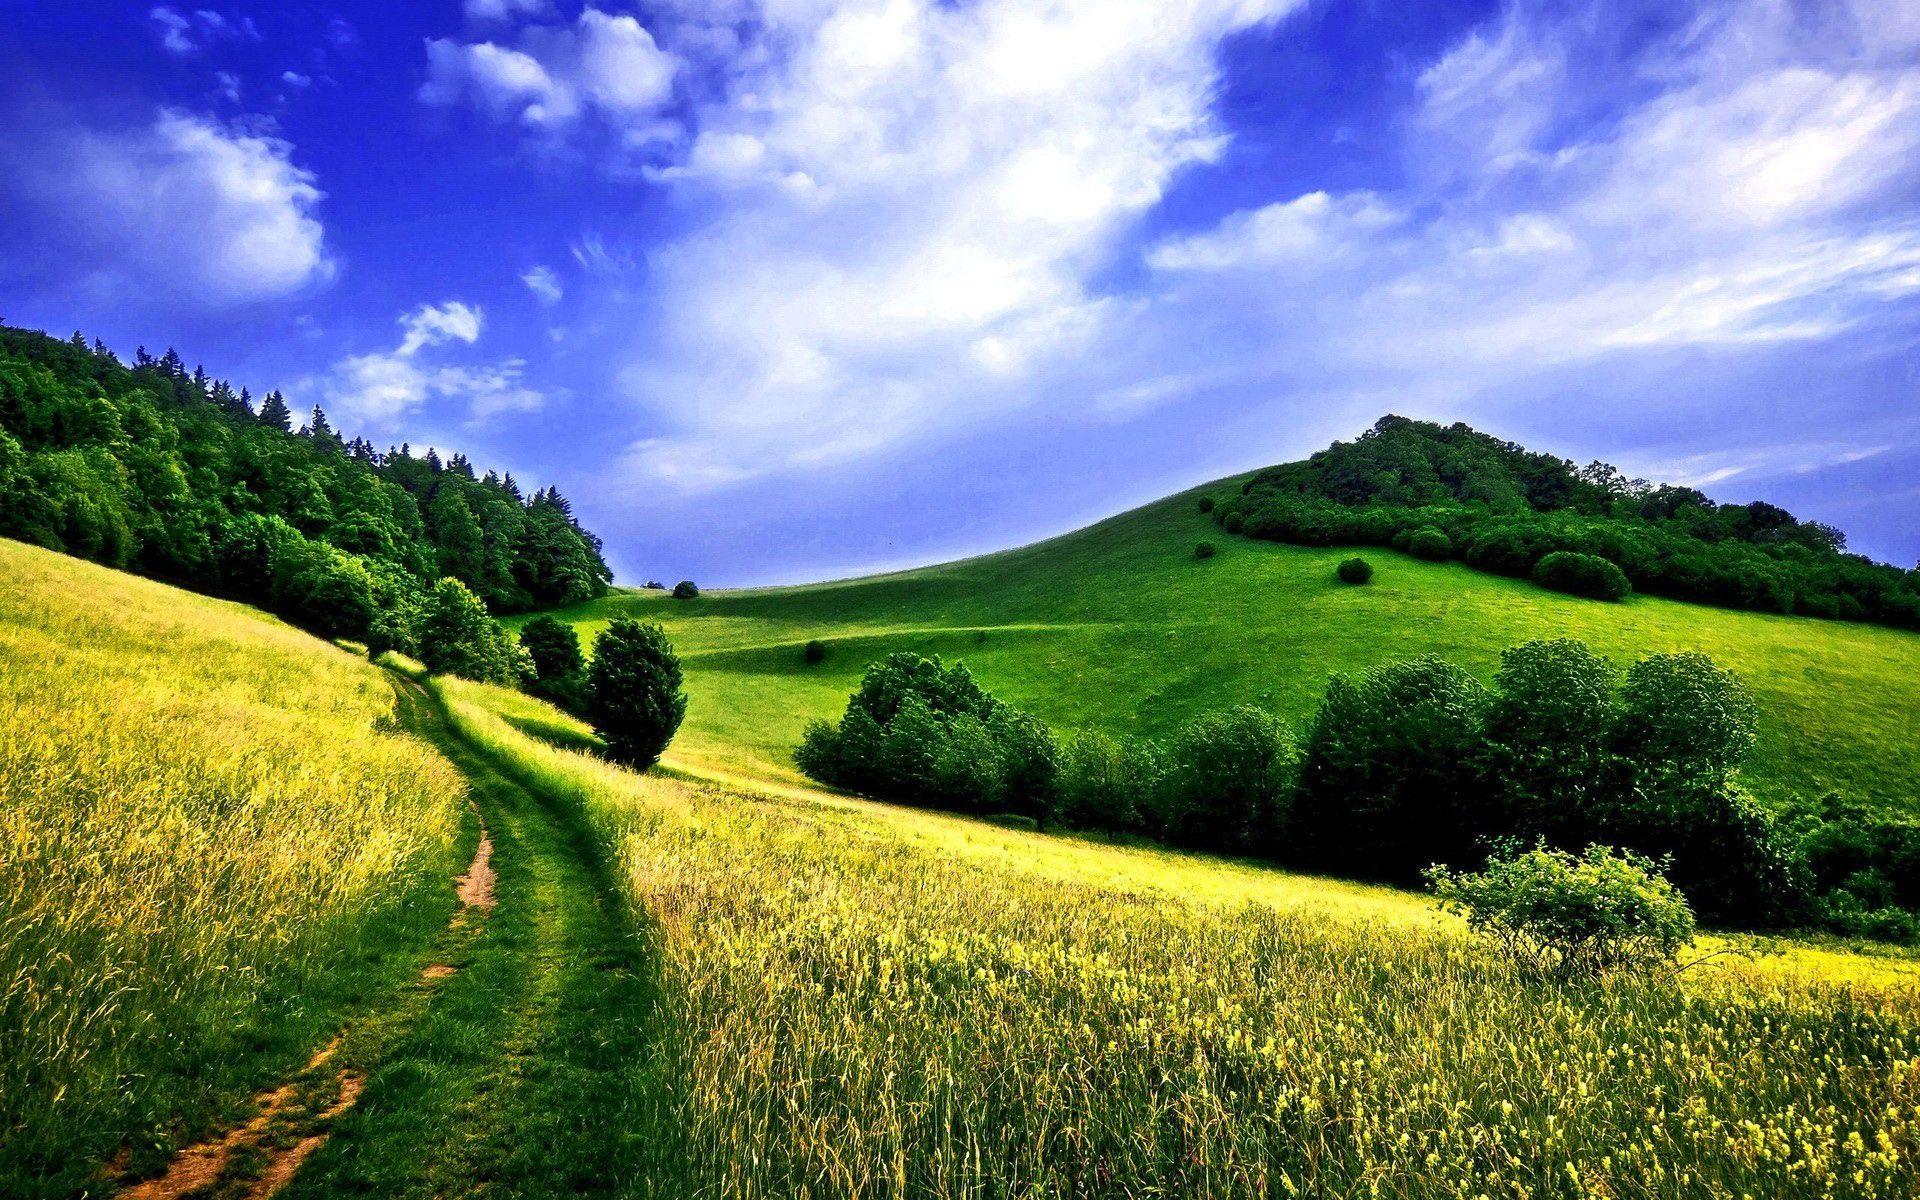 Country Road In A Green Field. Download HD Wallpaper For Desktop